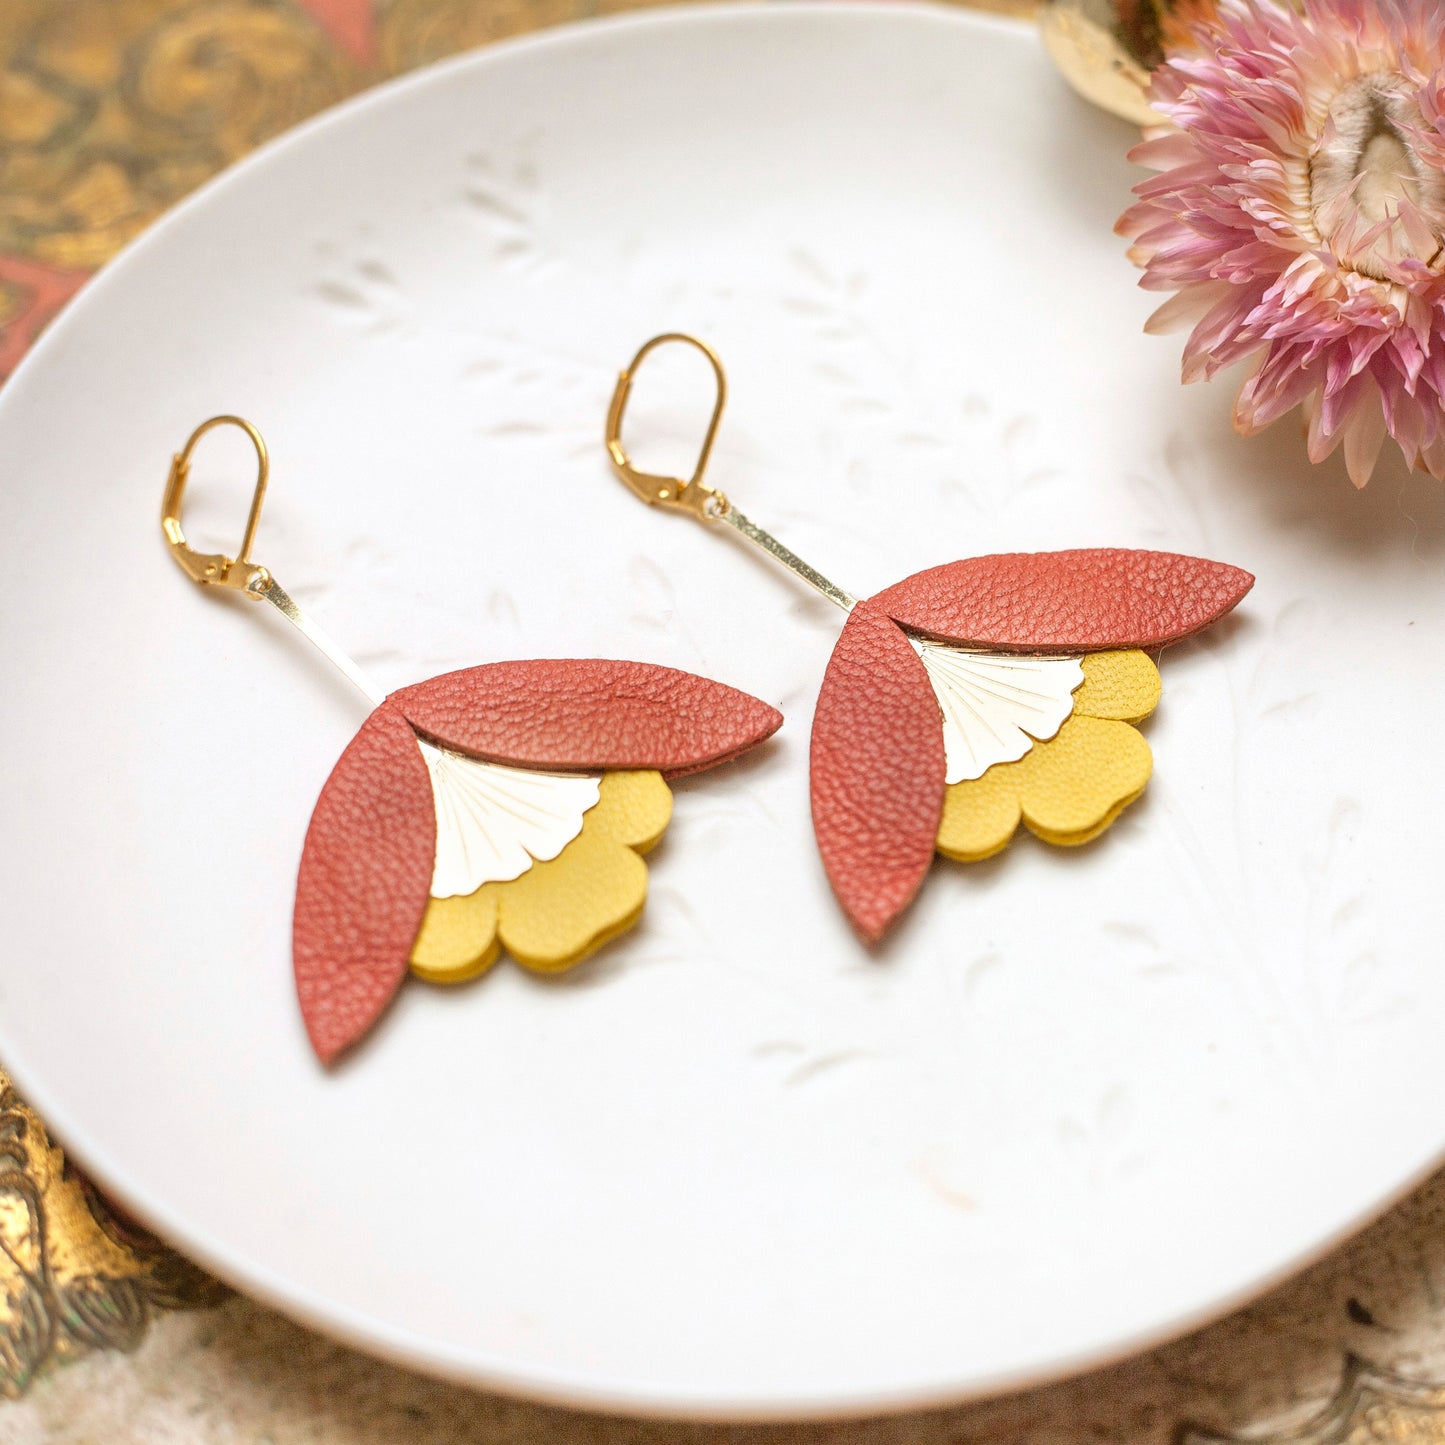 Ginkgo Flower earrings in terracotta and yellow leather